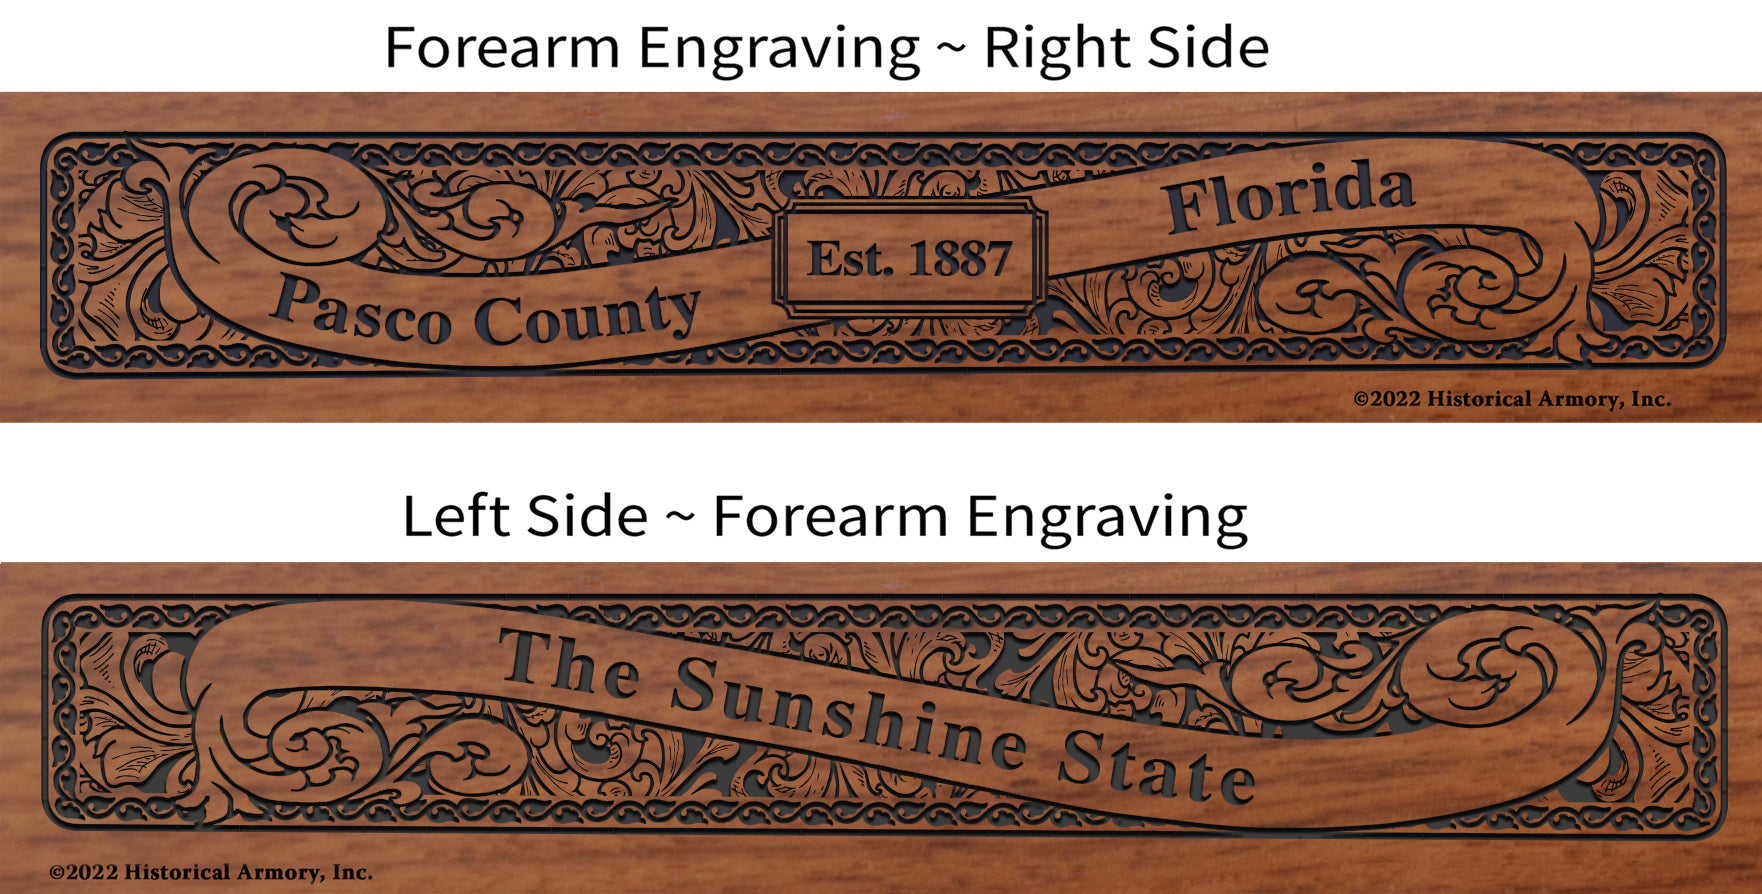 Pasco County Florida Engraved Rifle Forearm